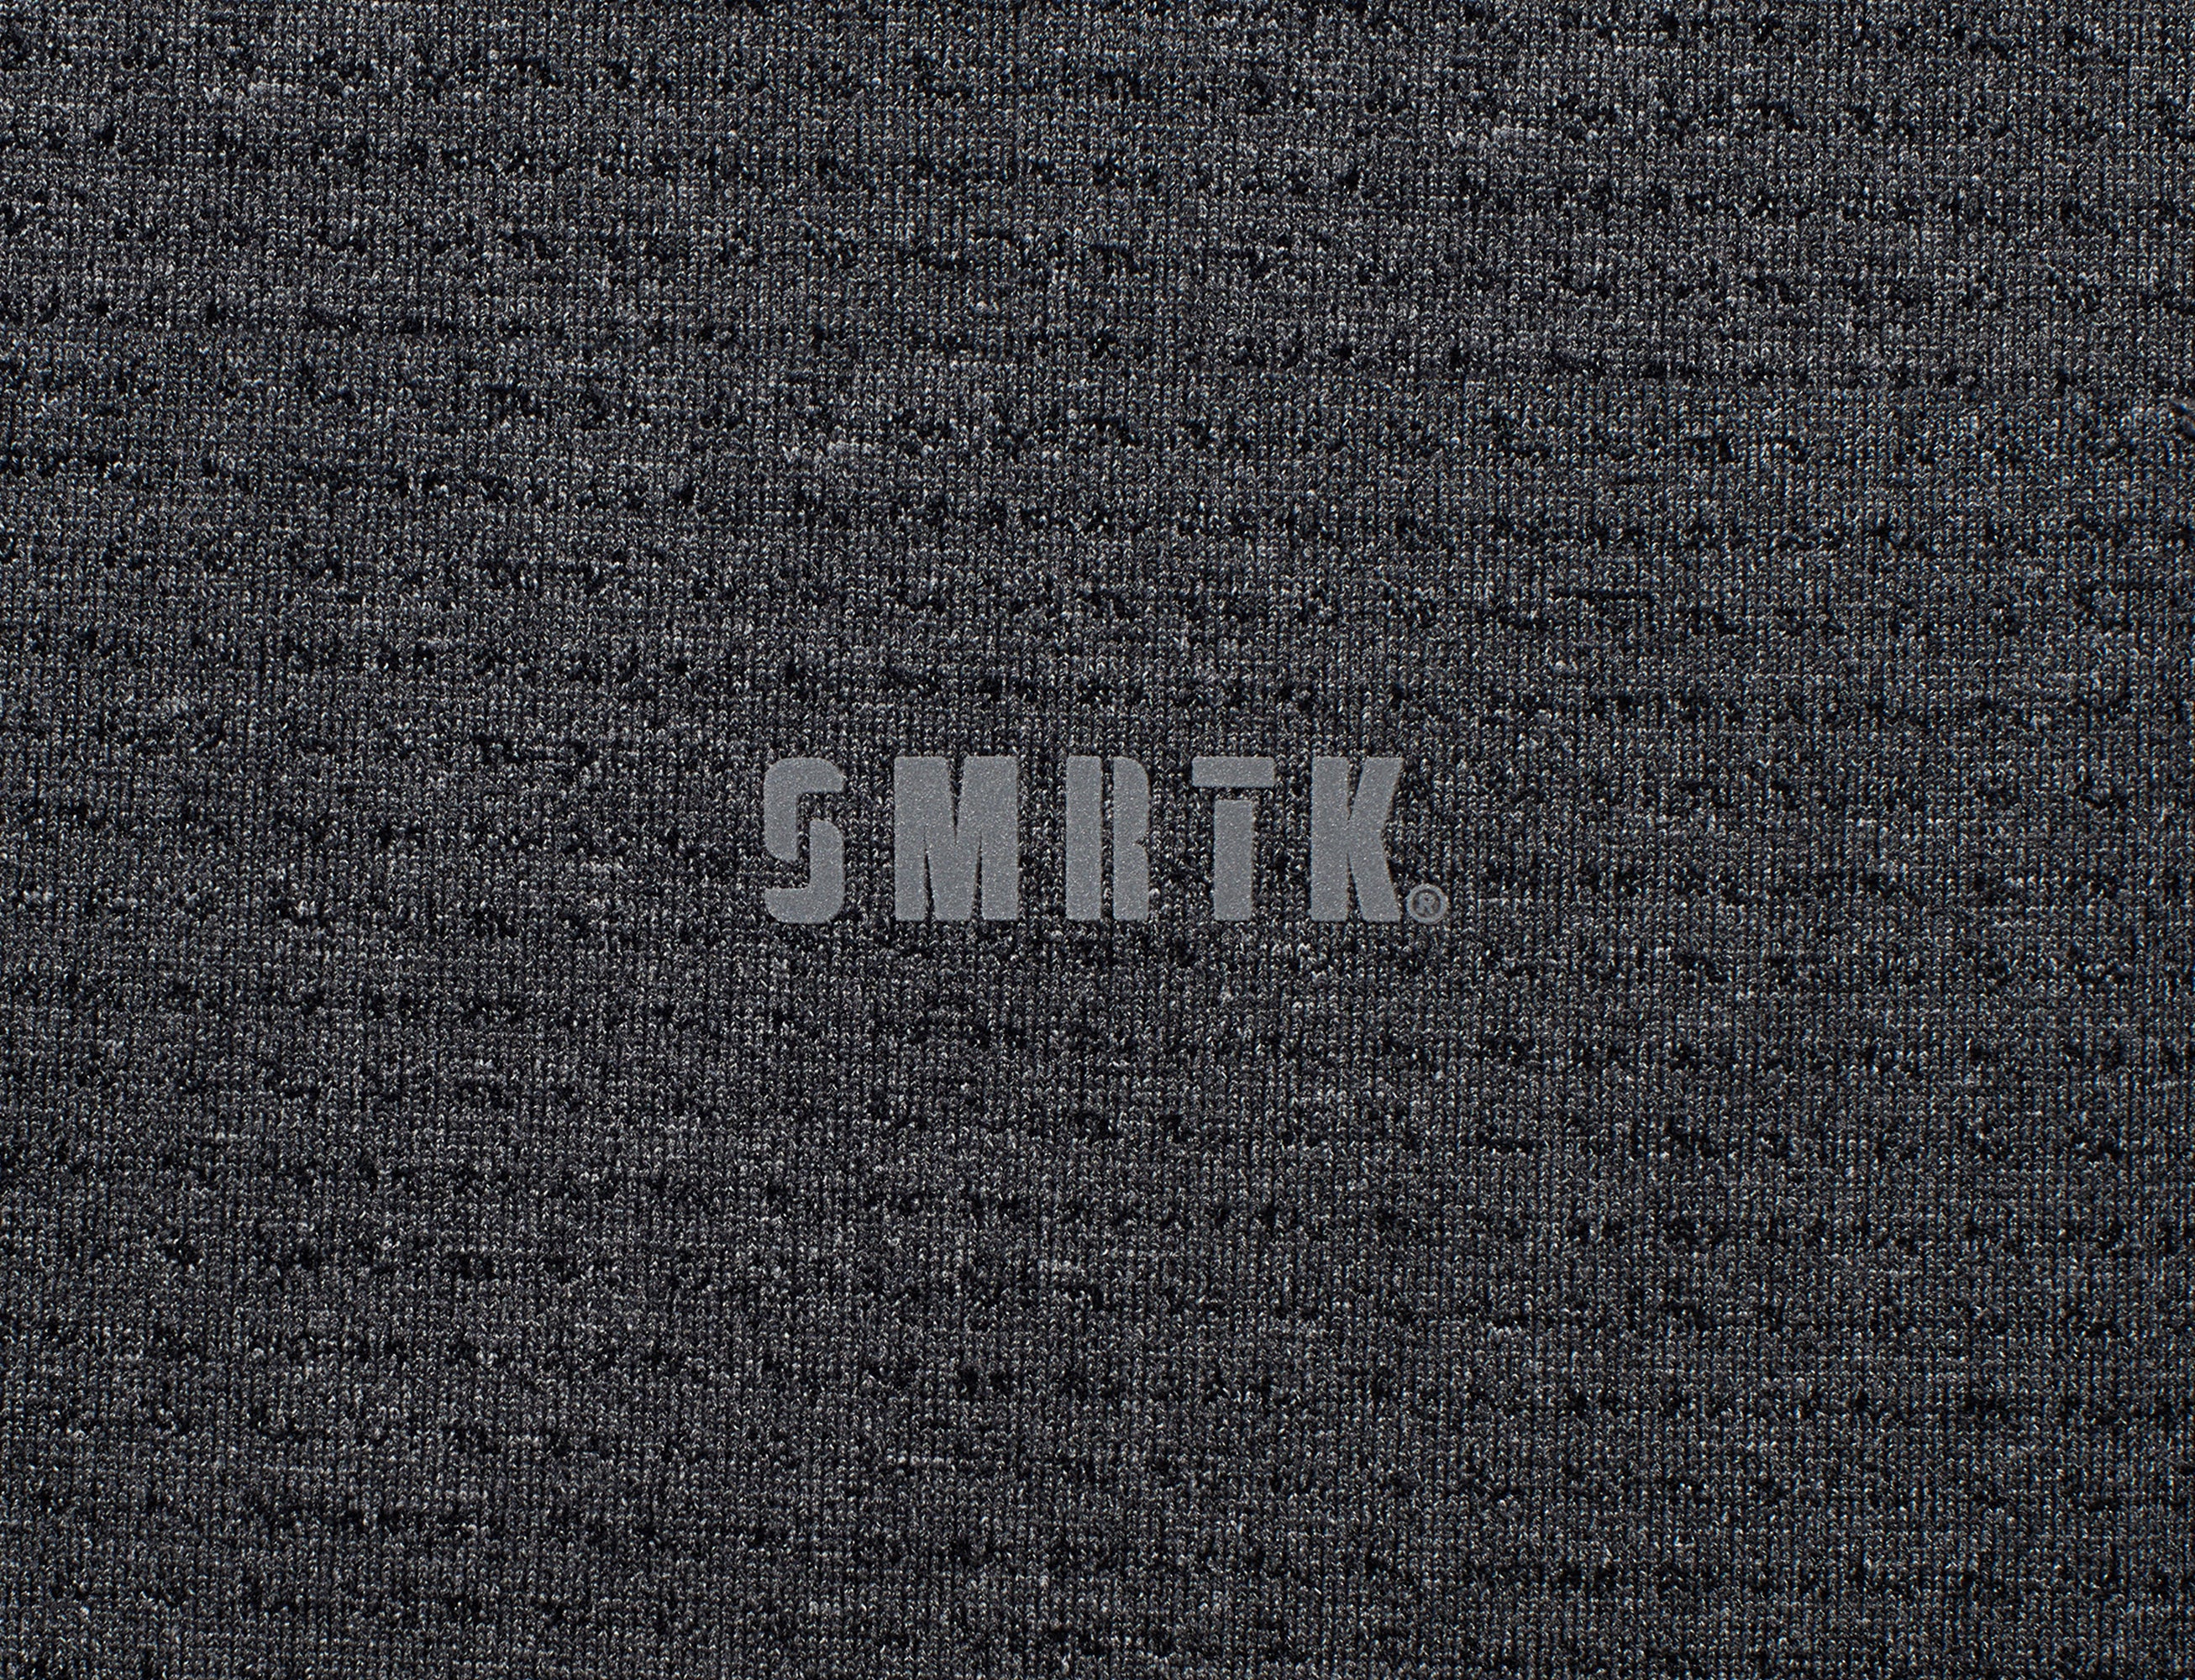 SMRTK Long Sleeve Performance Tee (3 pack)